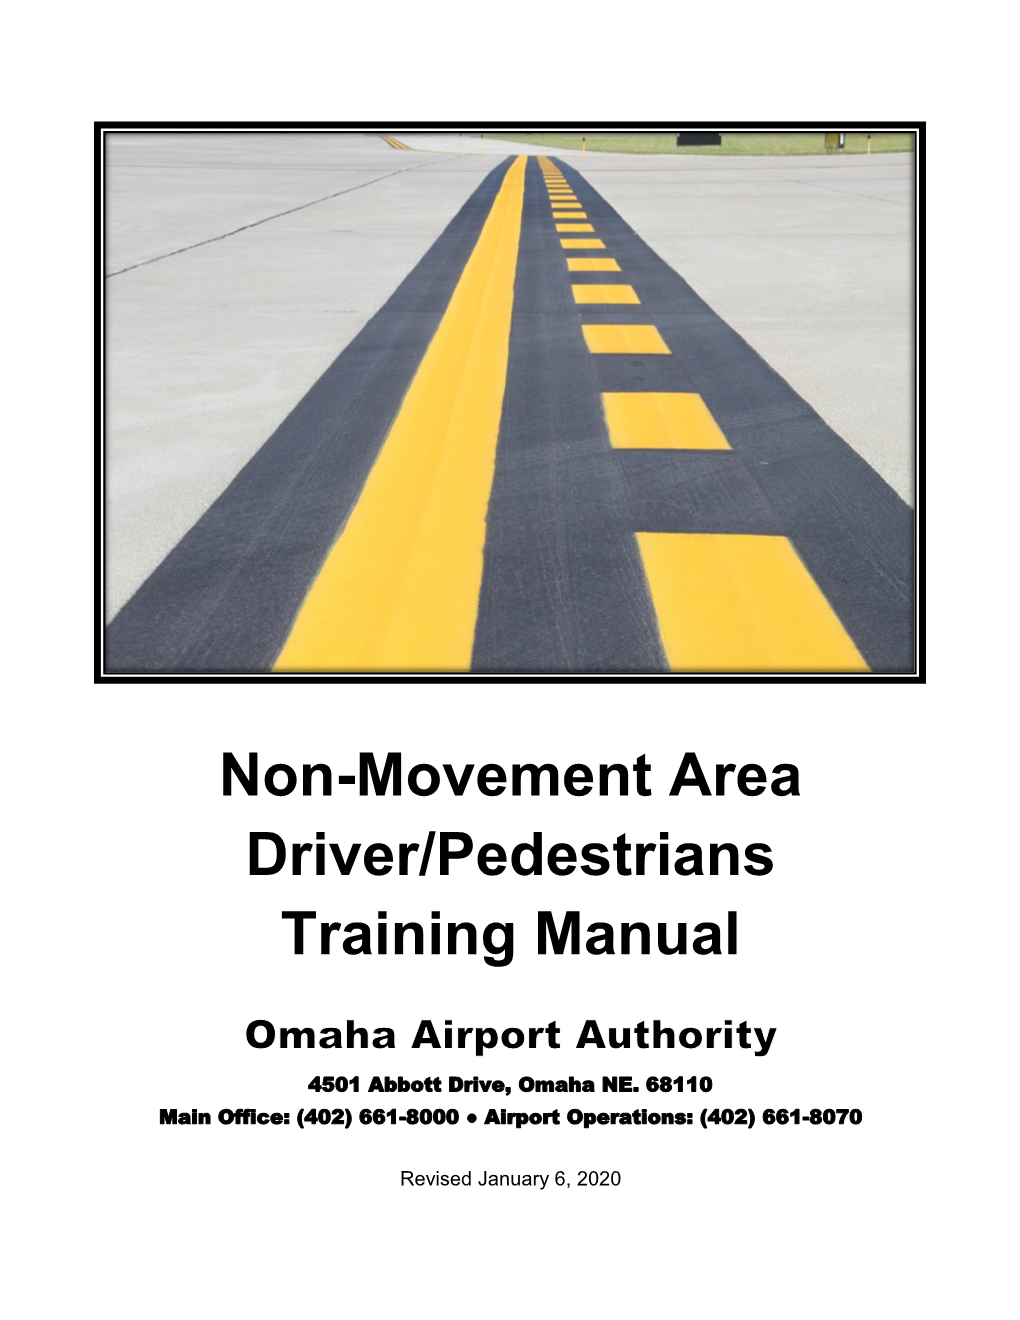 Non-Movement Area Driver/Pedestrians Training Manual